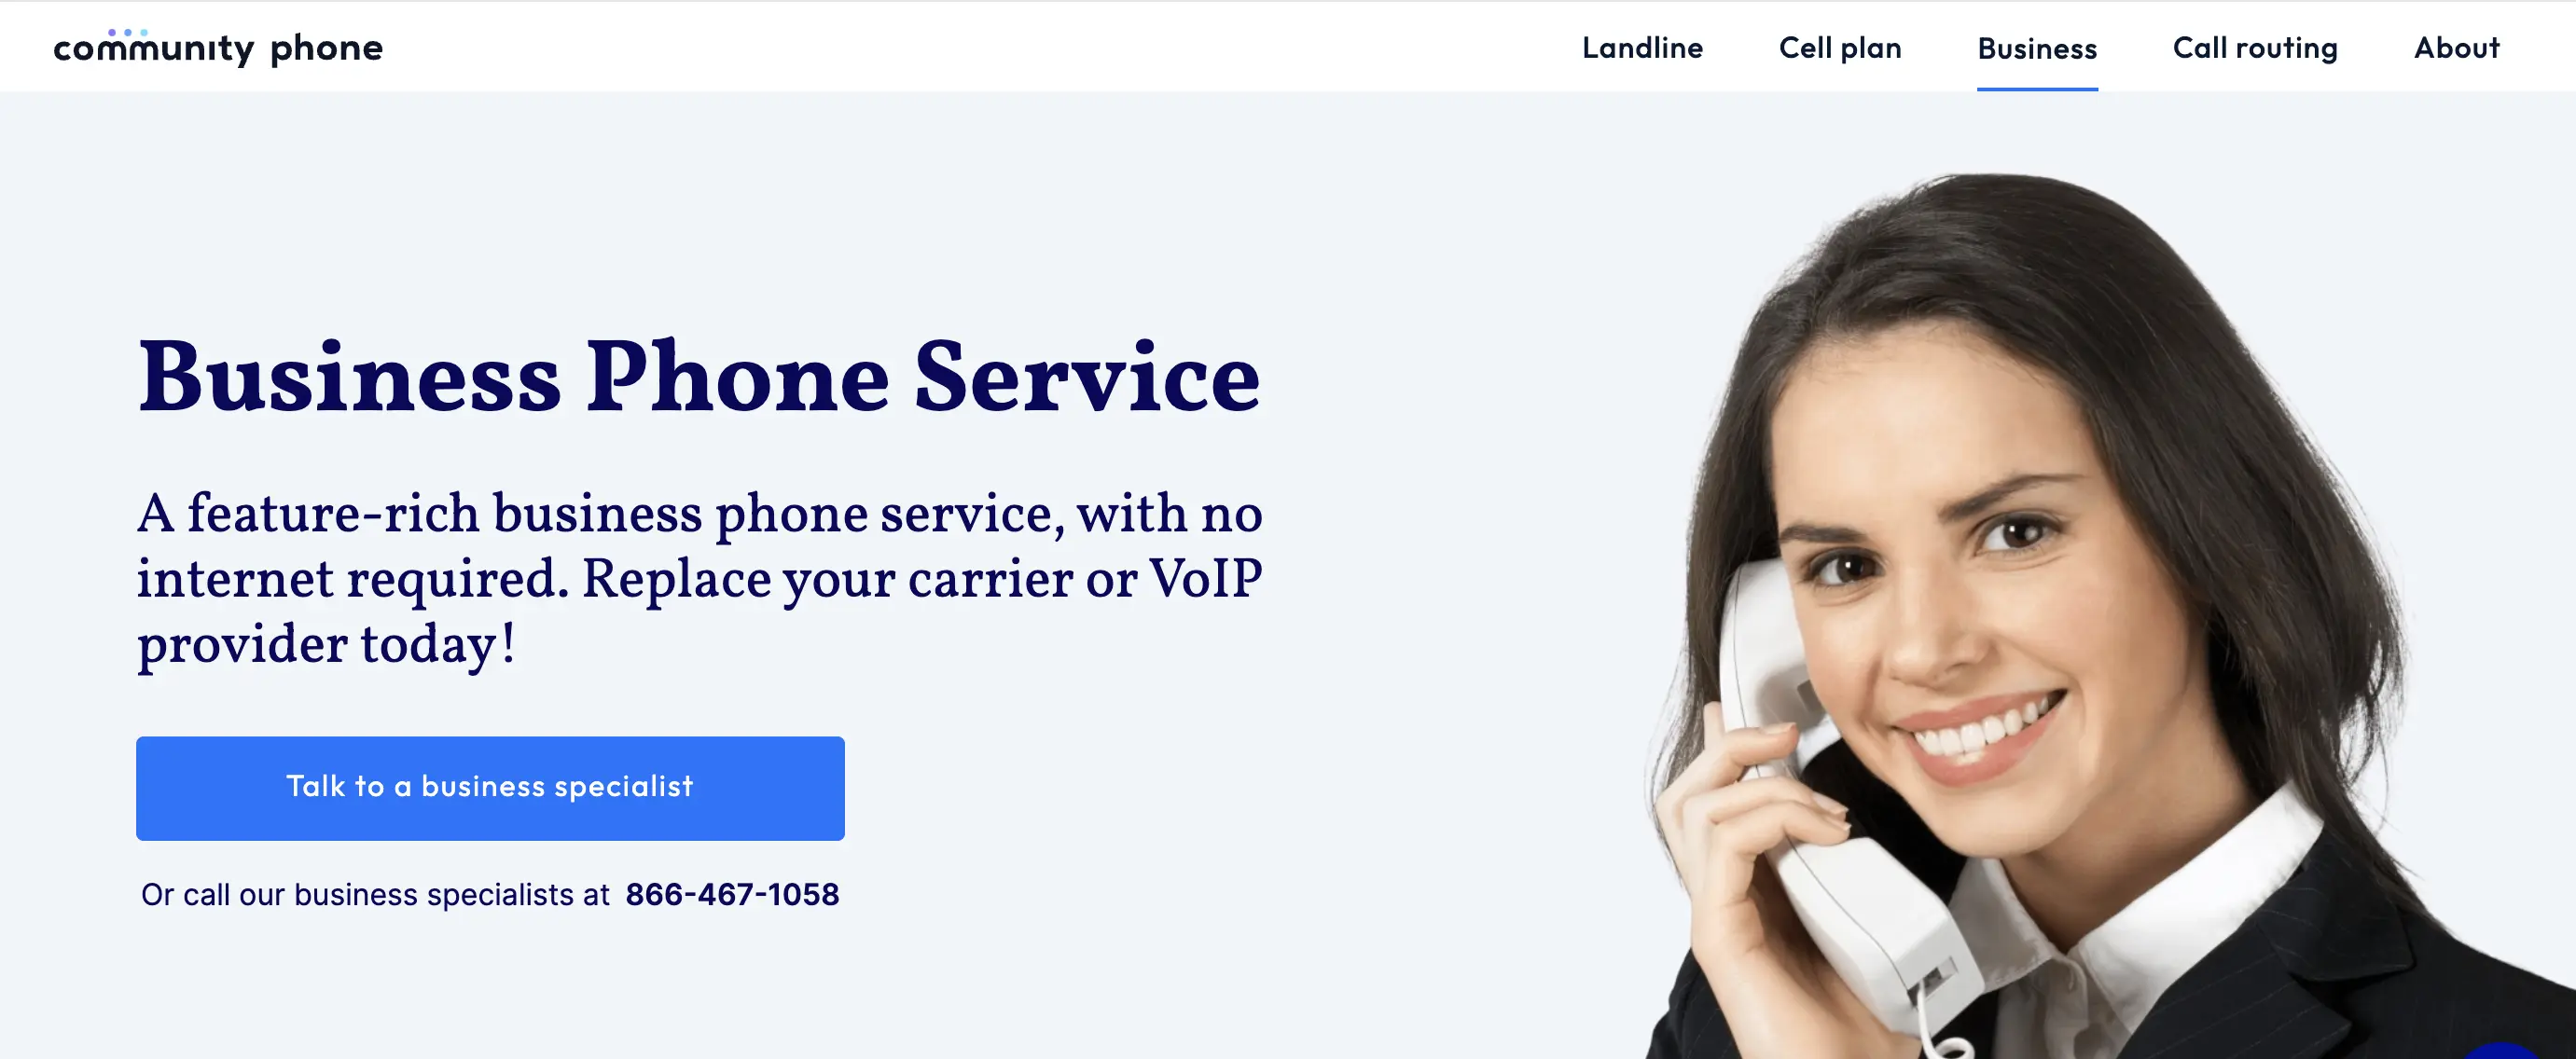 Community Phone's Business Phone Service